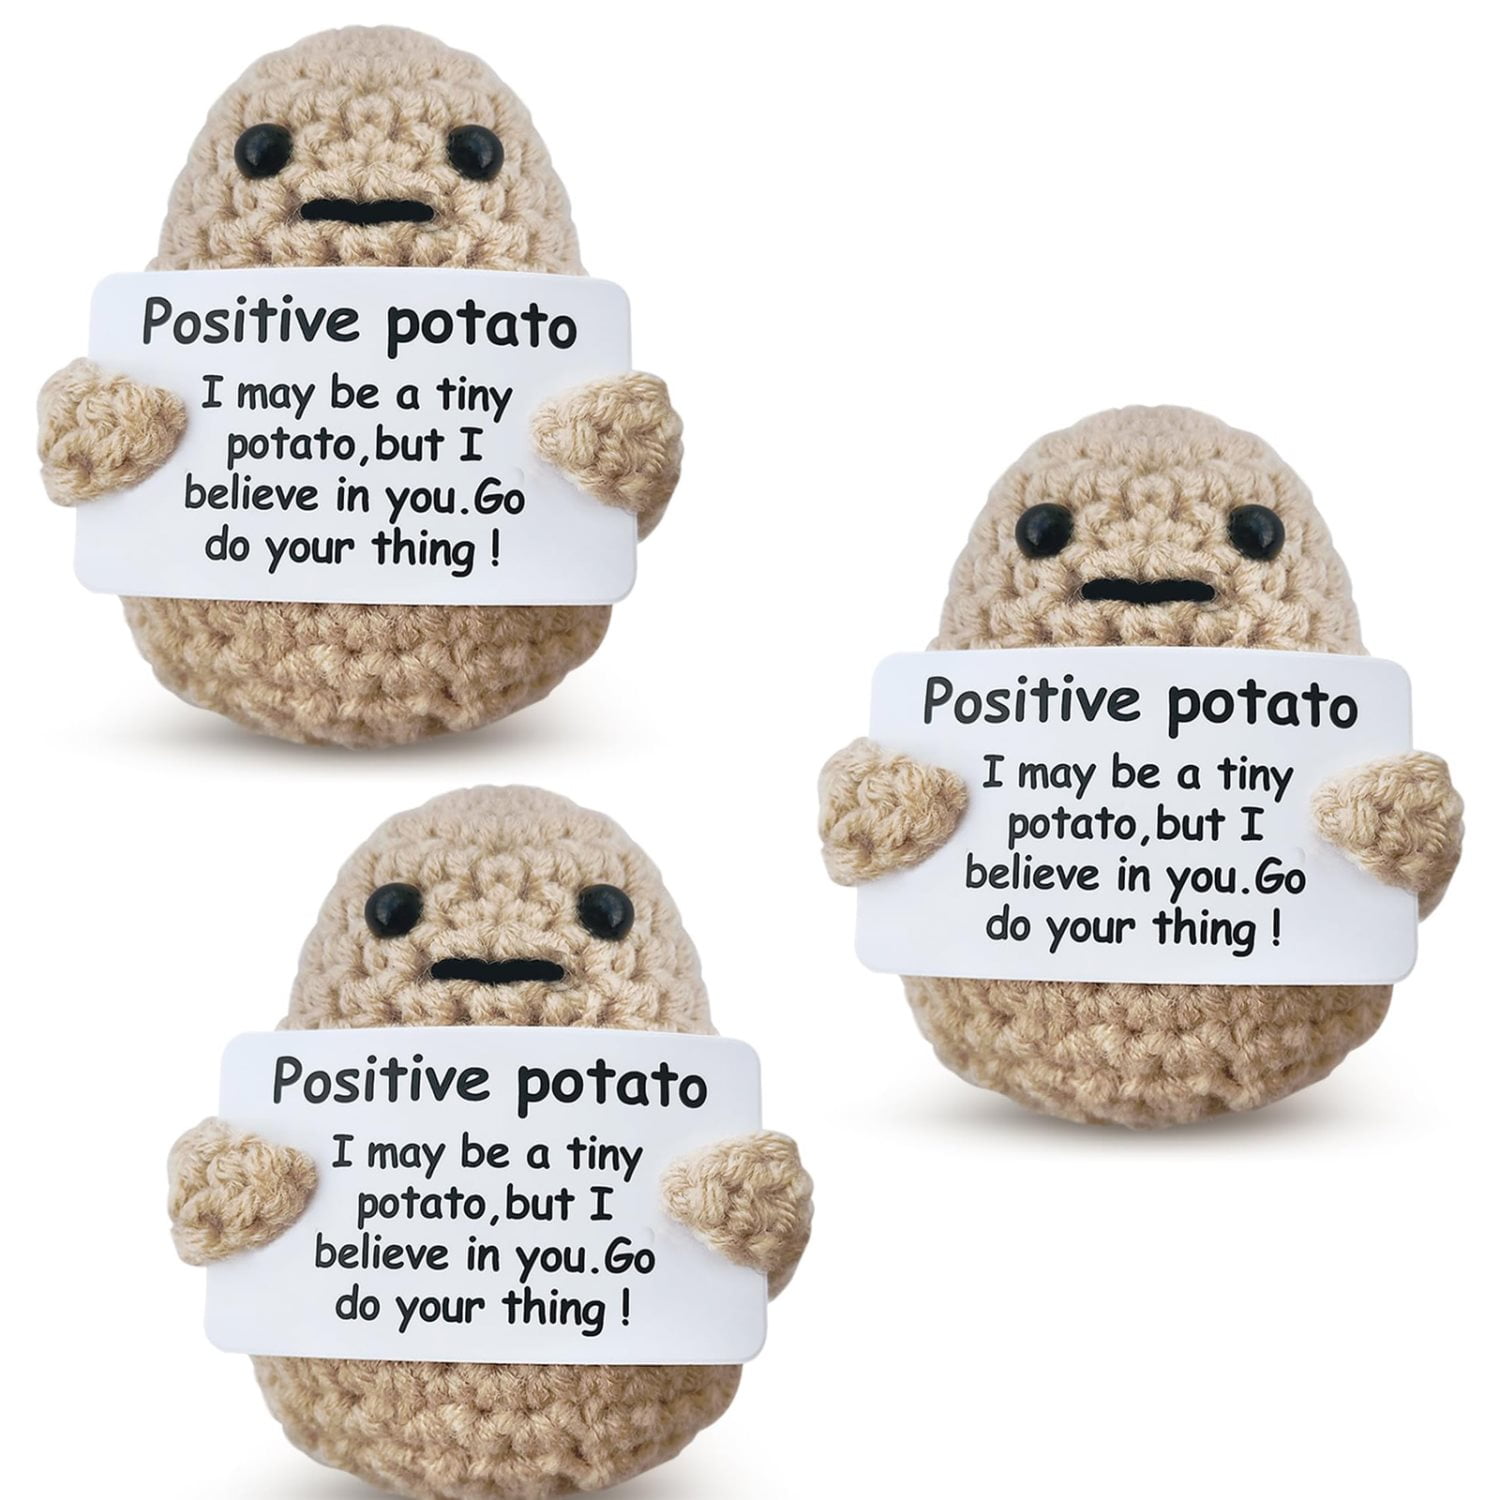 Positive Potatoes Knitting Potato Inspired Toy- Tiny Doll-Funny